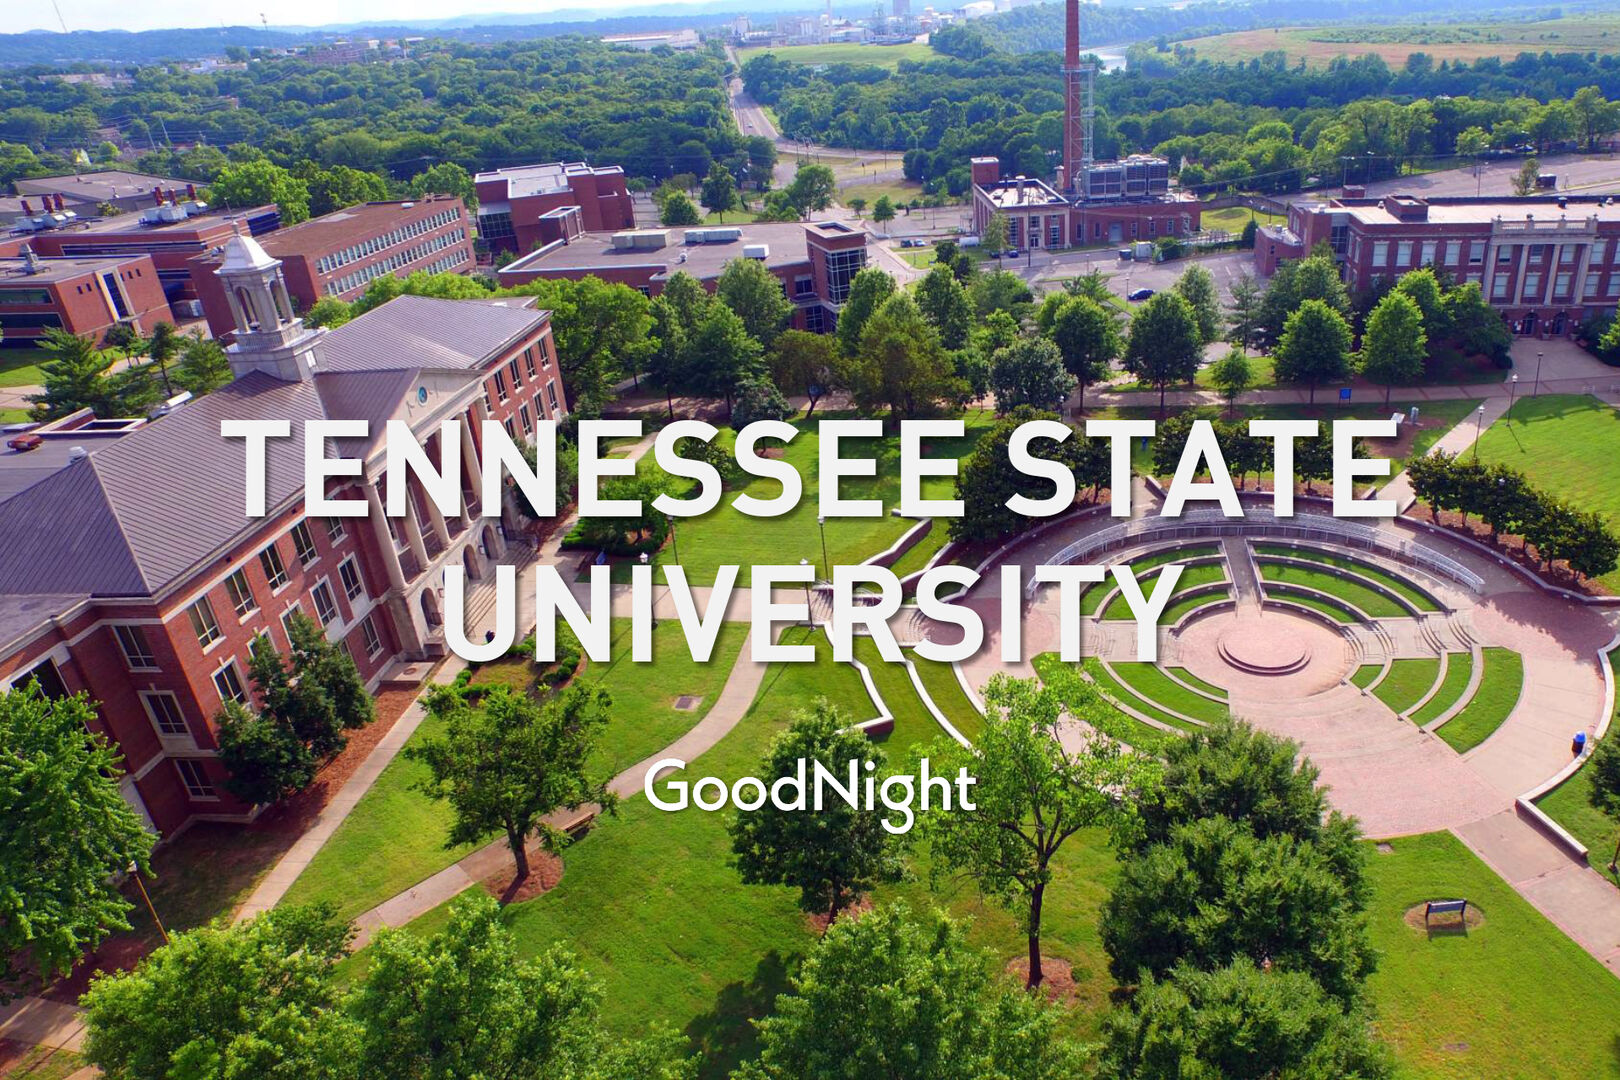 26 mins: Tennessee State University